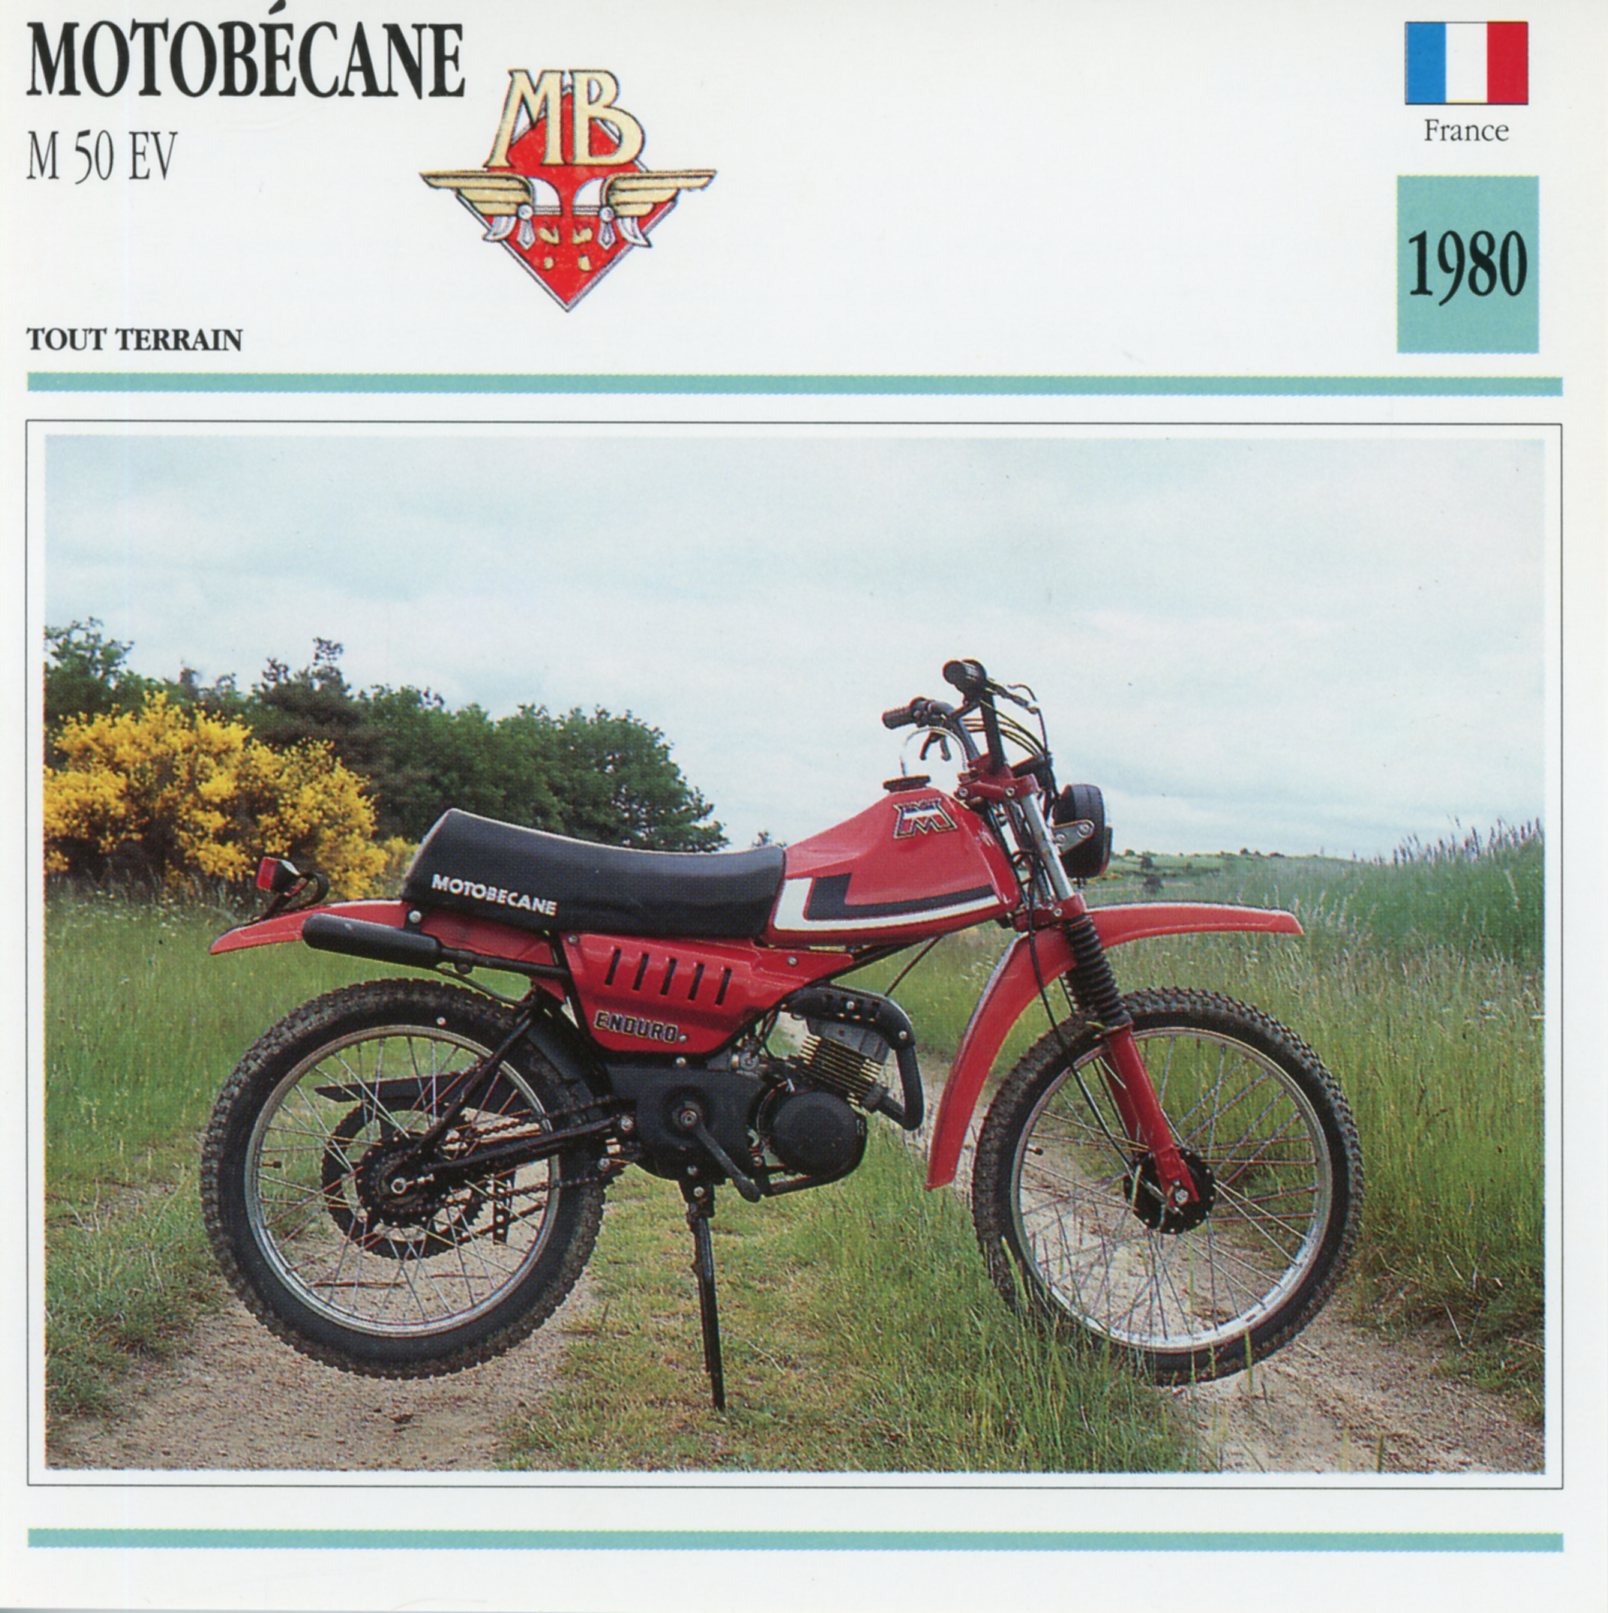 MOTOBÉCANE-M50EV-1980-MEV-LEMASTERBROCKERS-FICHE-MOTO-CARD-ATLAS